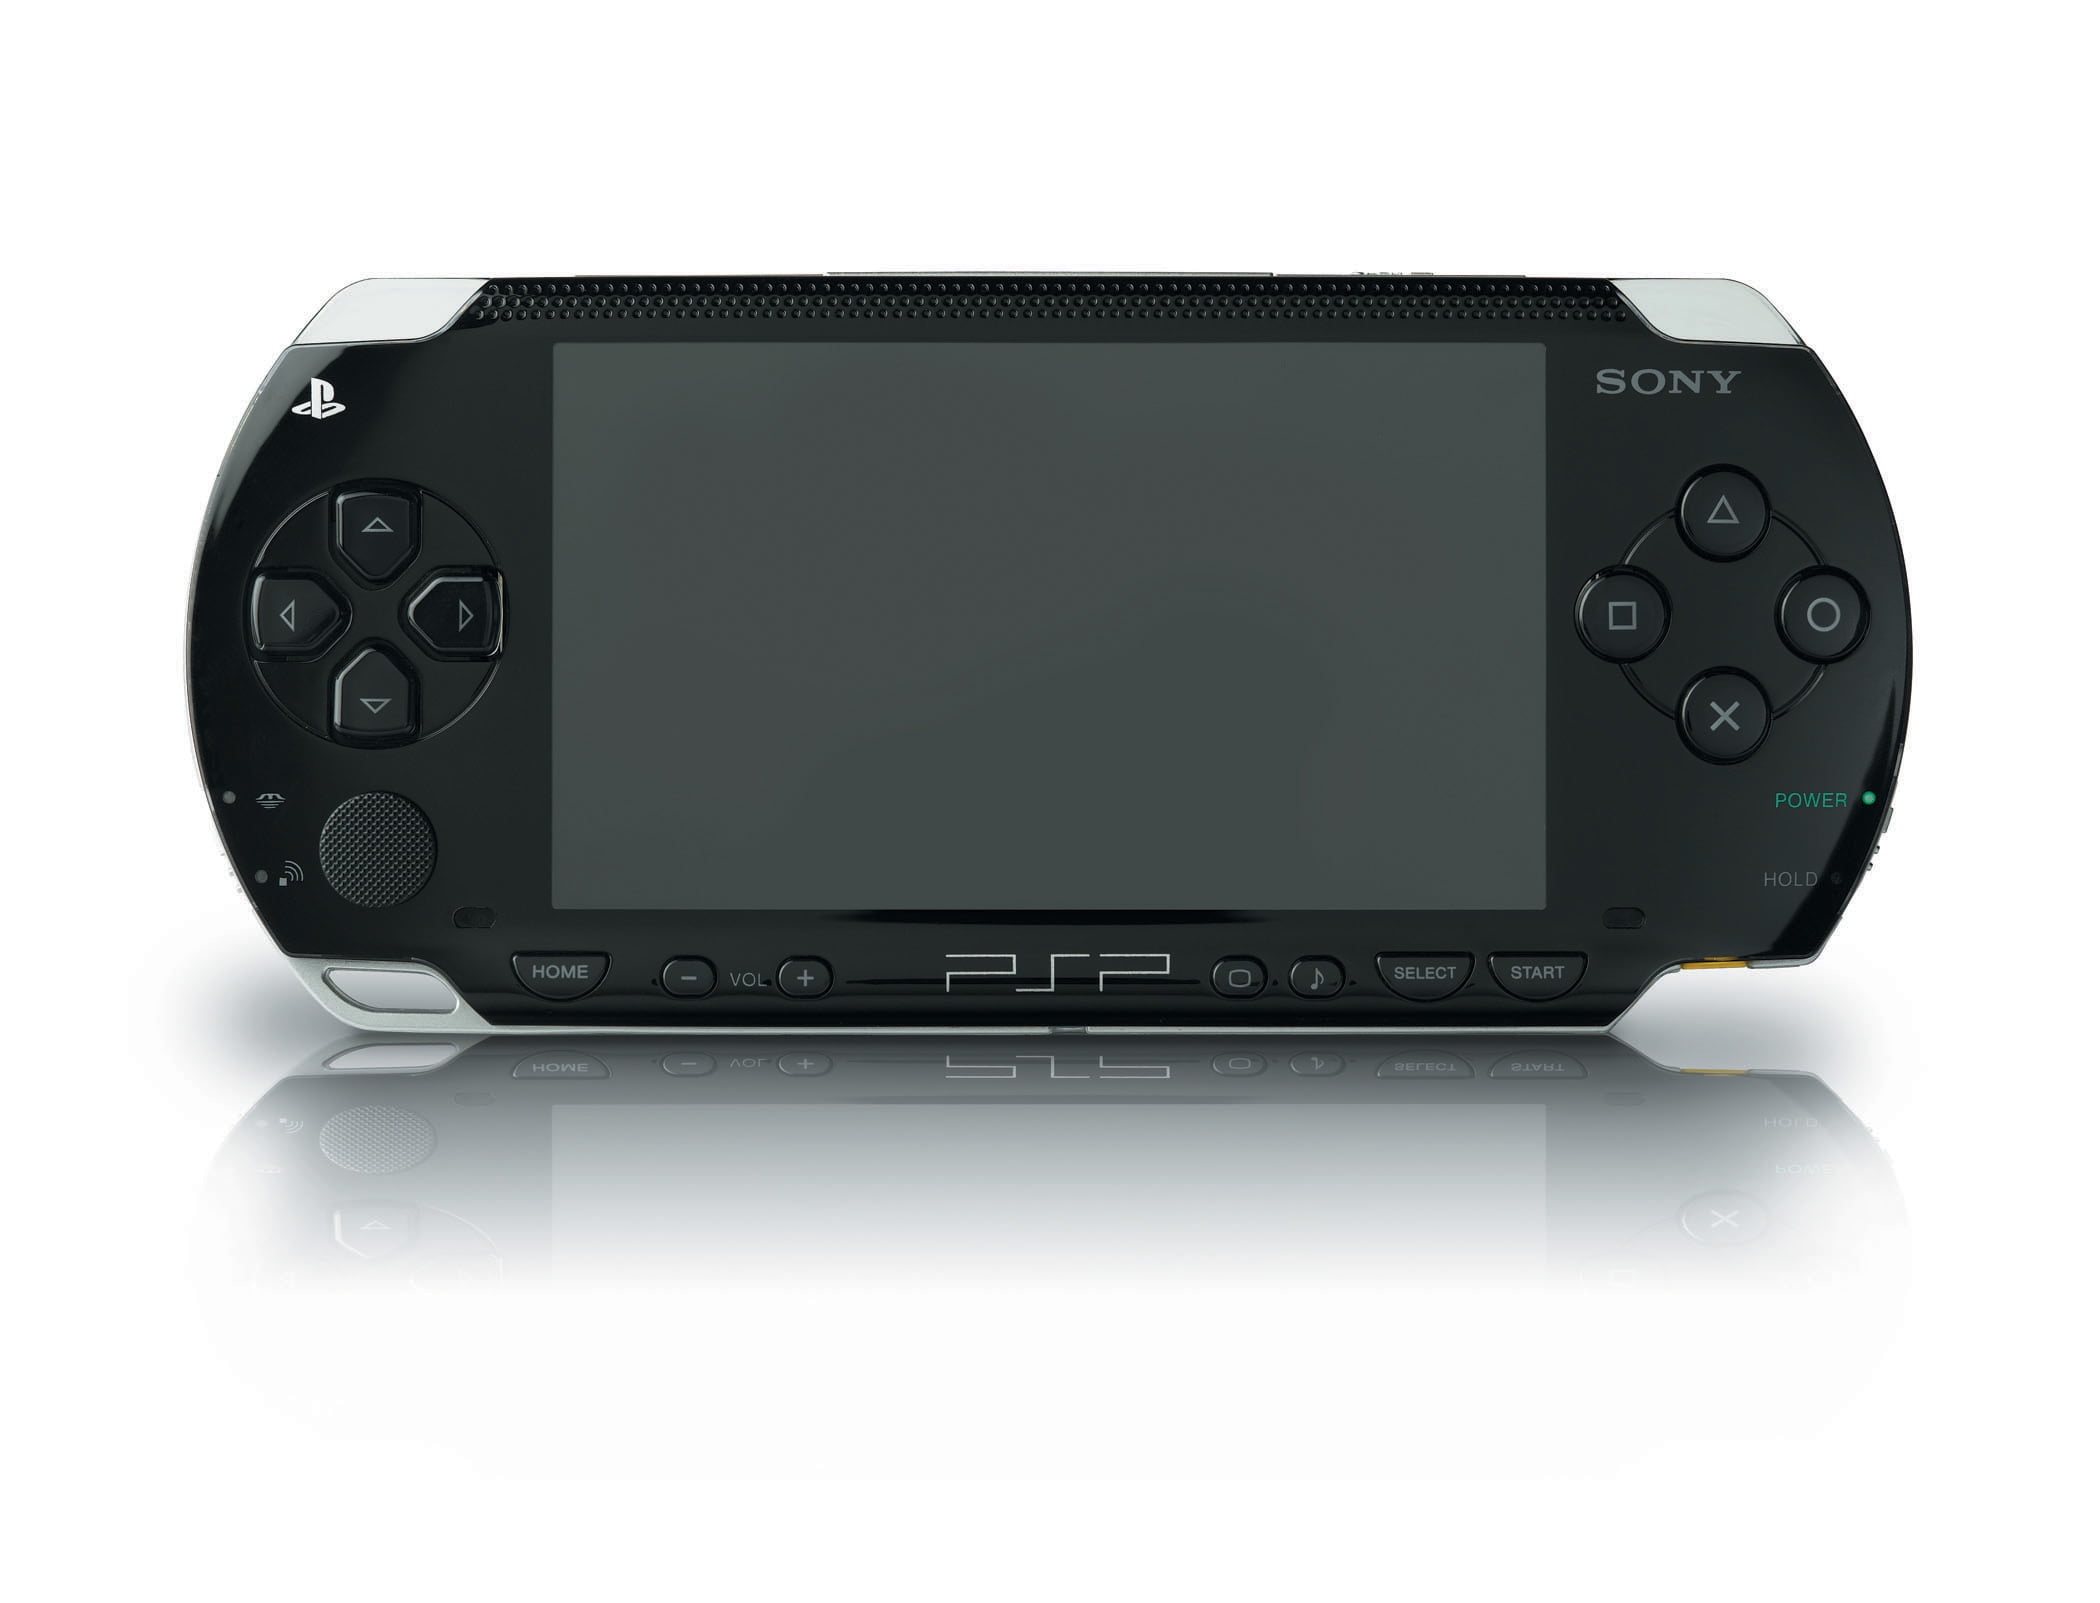 Restored Sony PlayStation Portable Core PSP 1000 Black Handheld